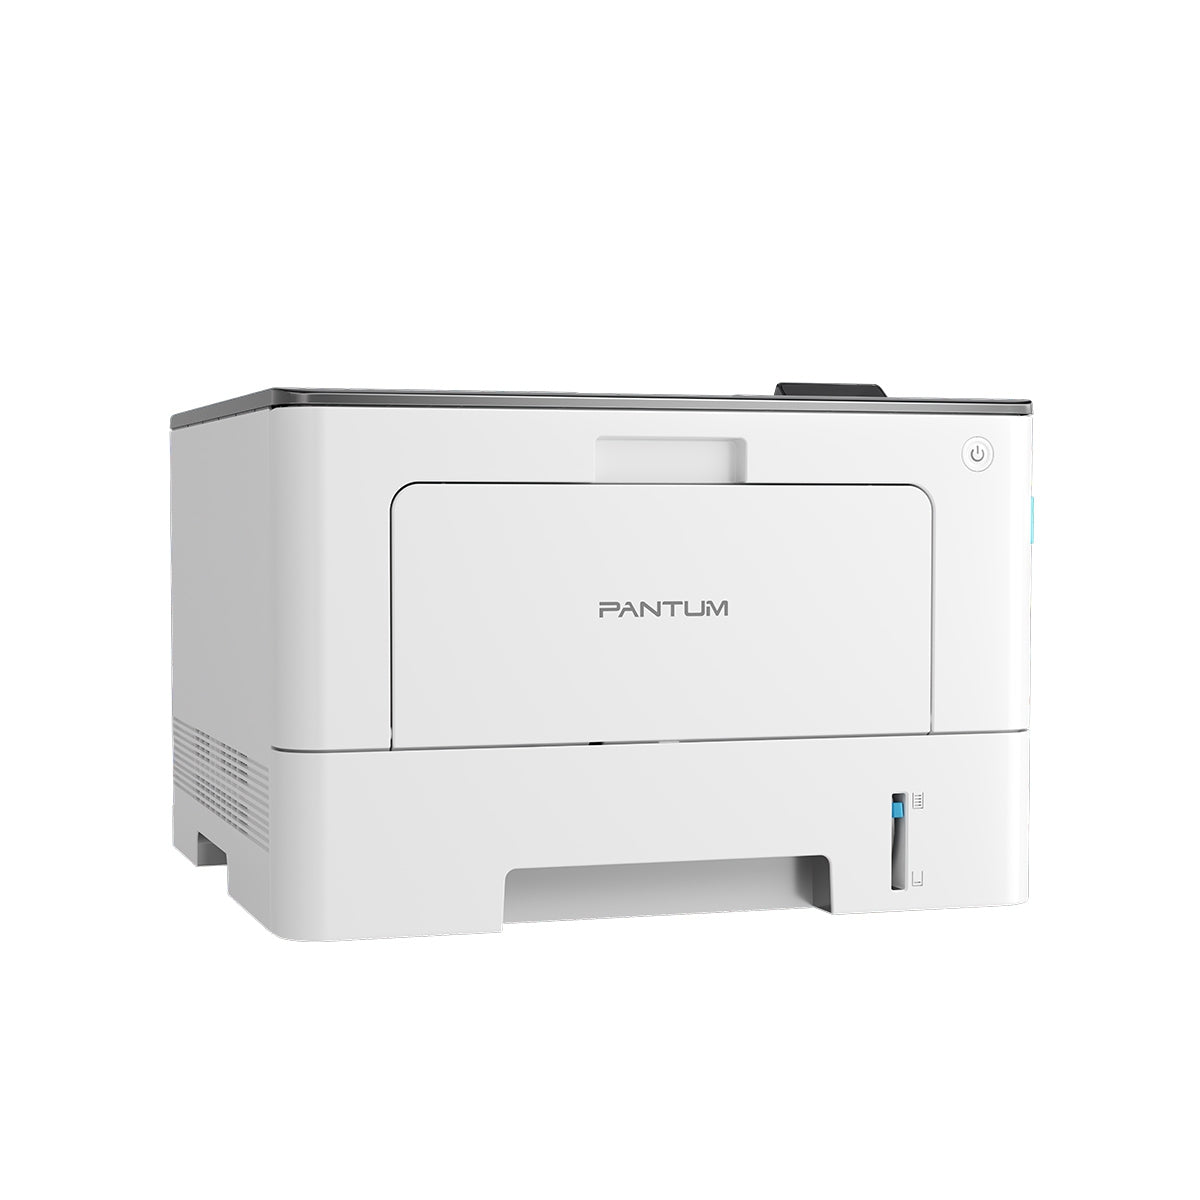 Impresora Pantum Bp5100Dw, Ppm 42 Negro, Laser Monocromatico, Usb, Wifi, Ethernet Red, Duplex